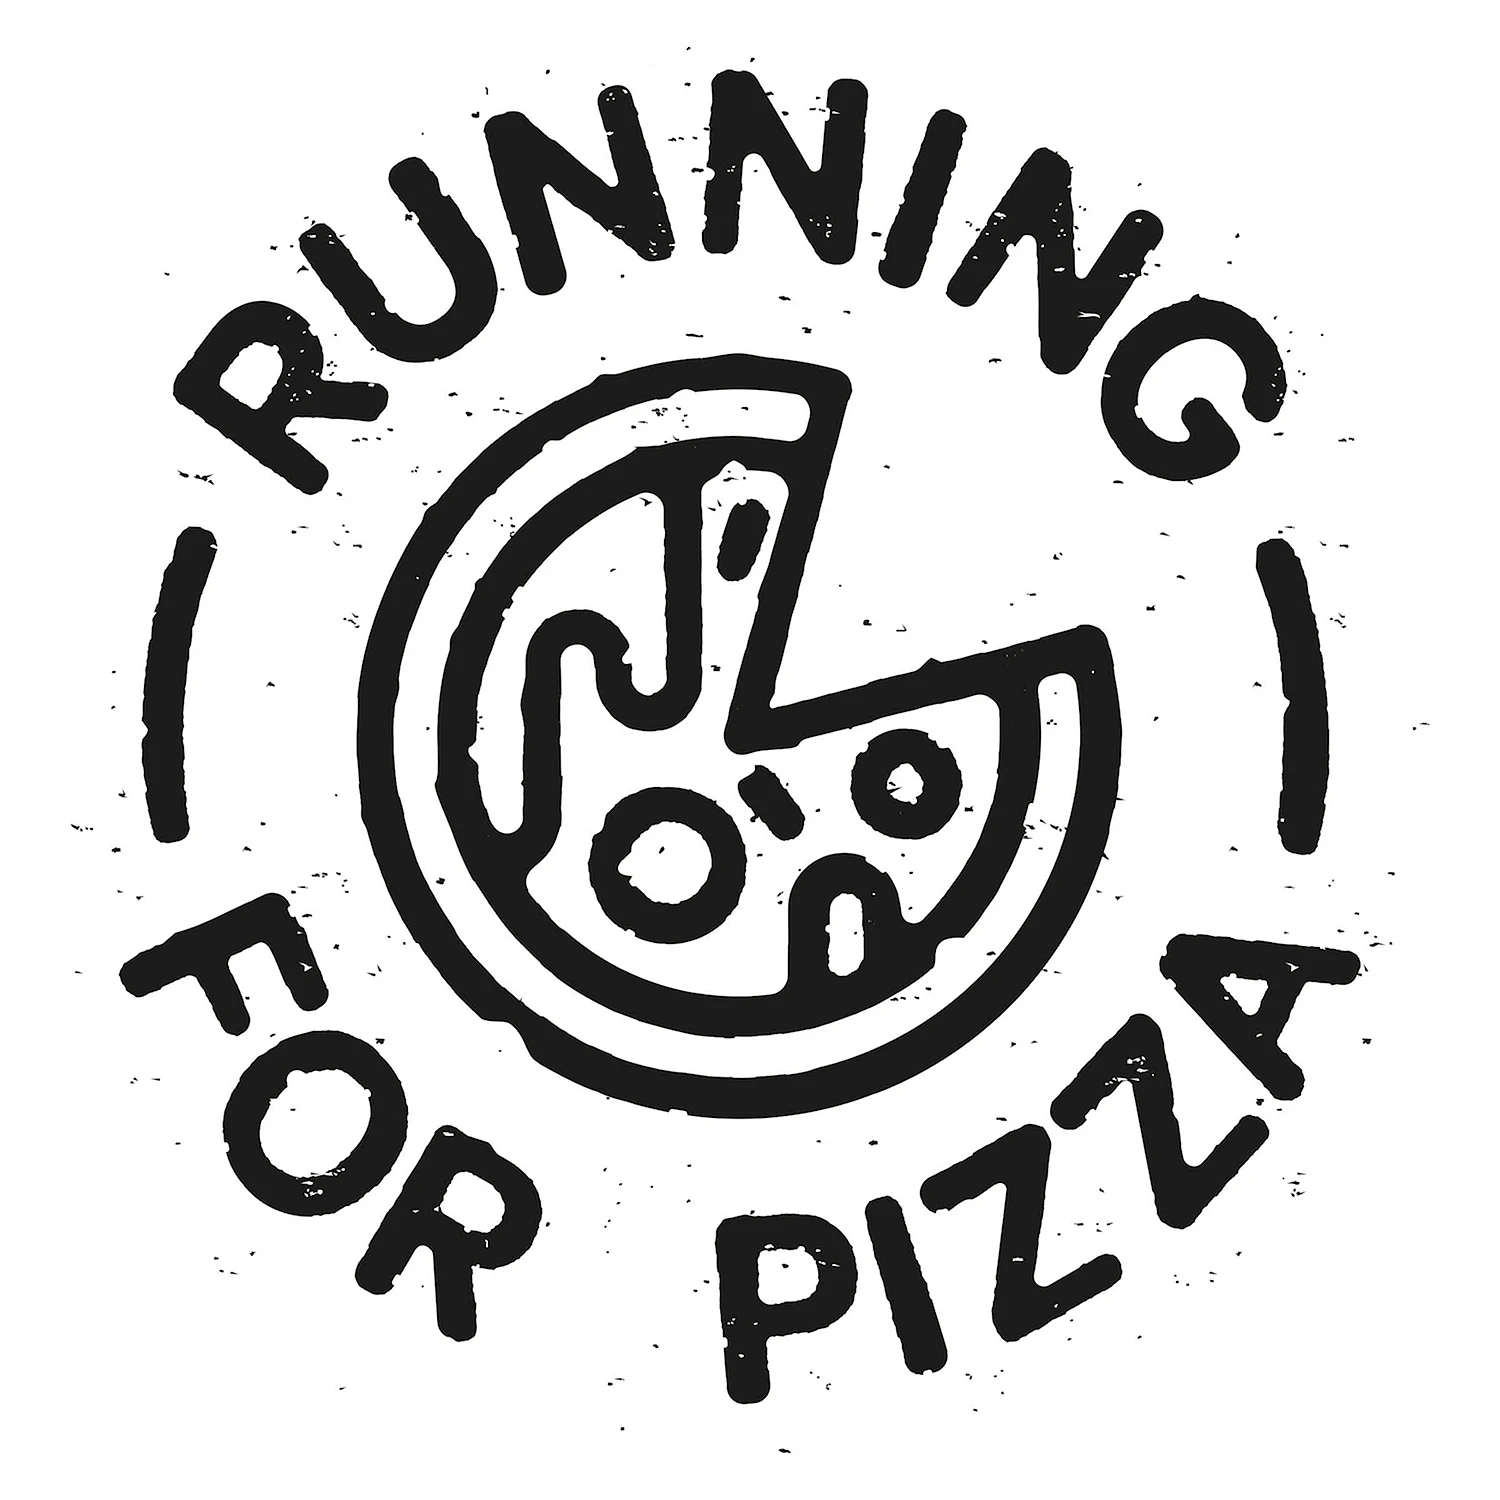 Логотип пиццерии